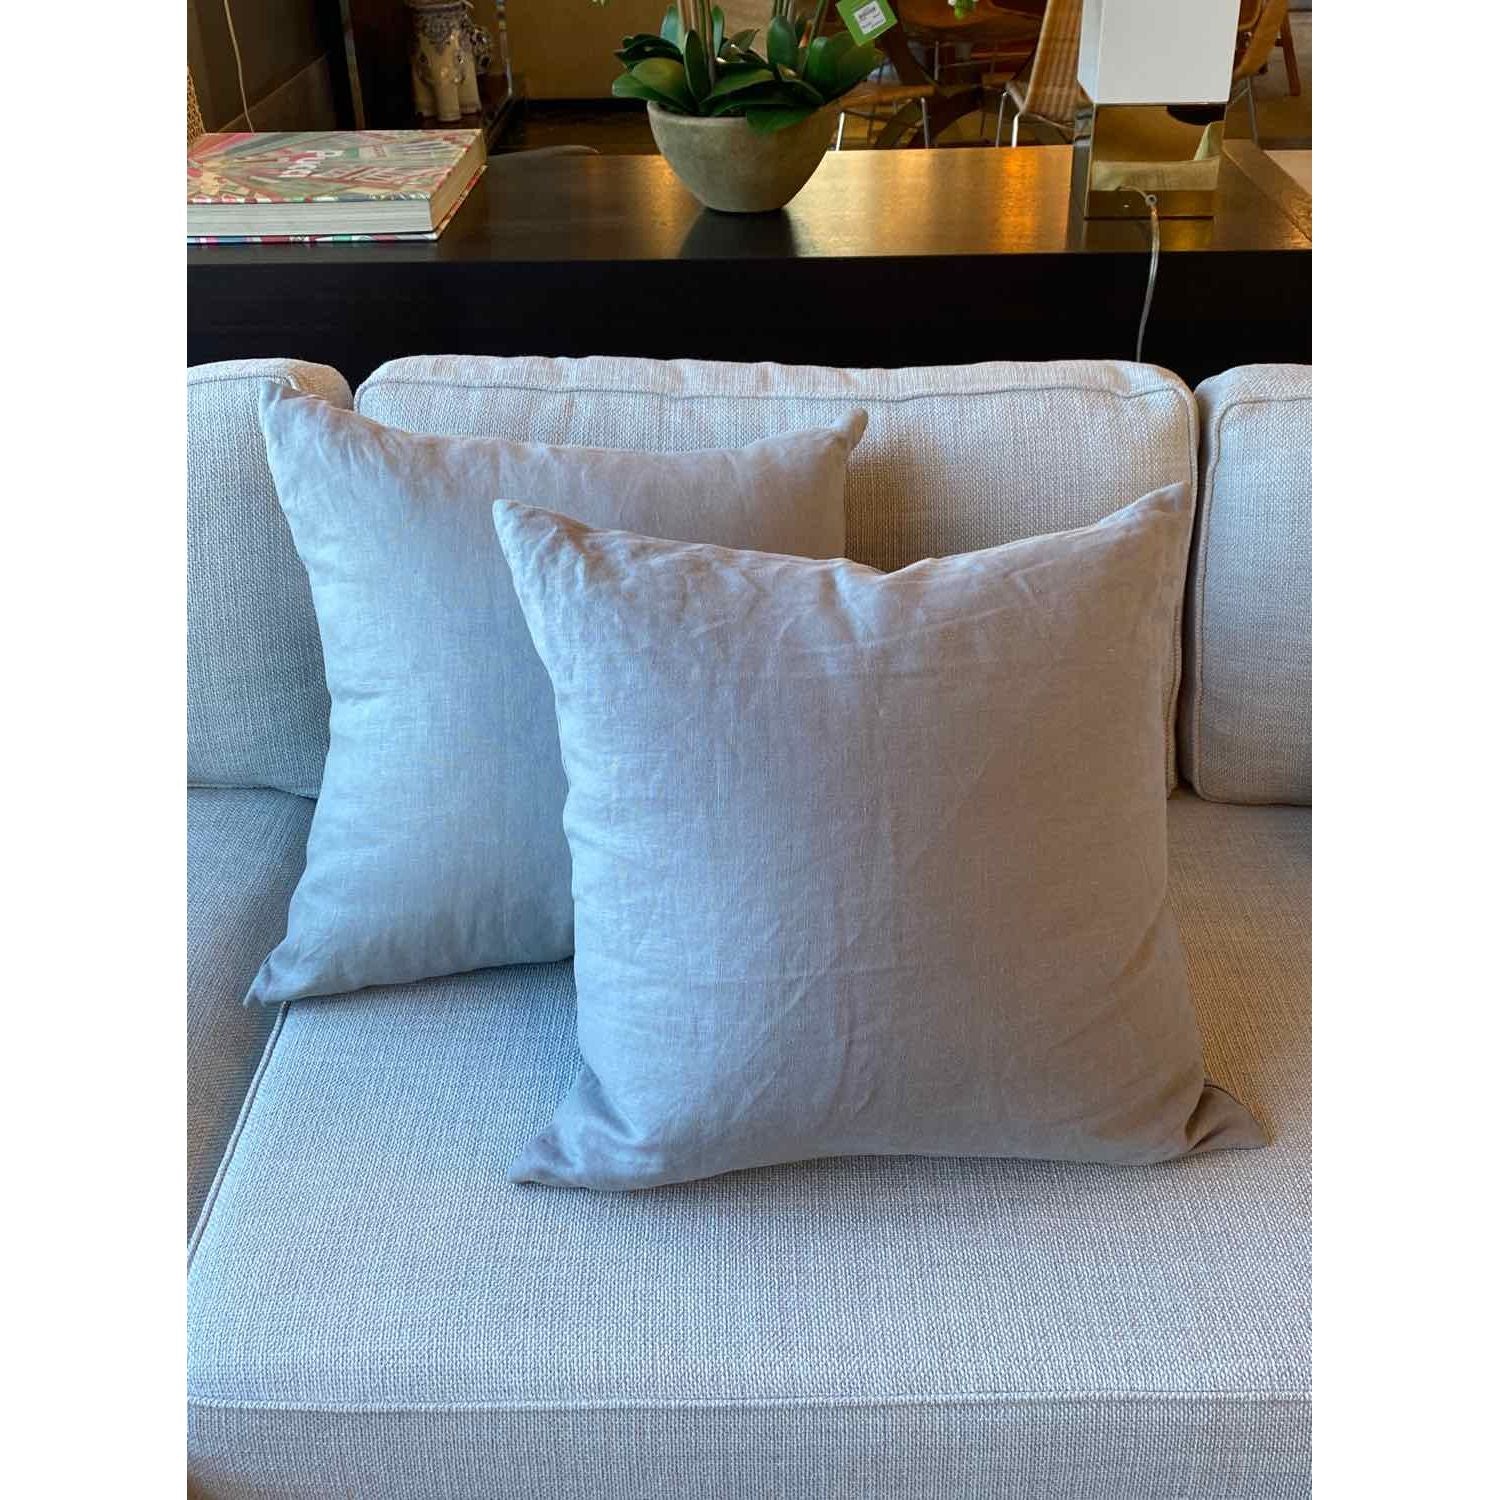 Pair of Grey Linen Pillows - colletteconsignment.com